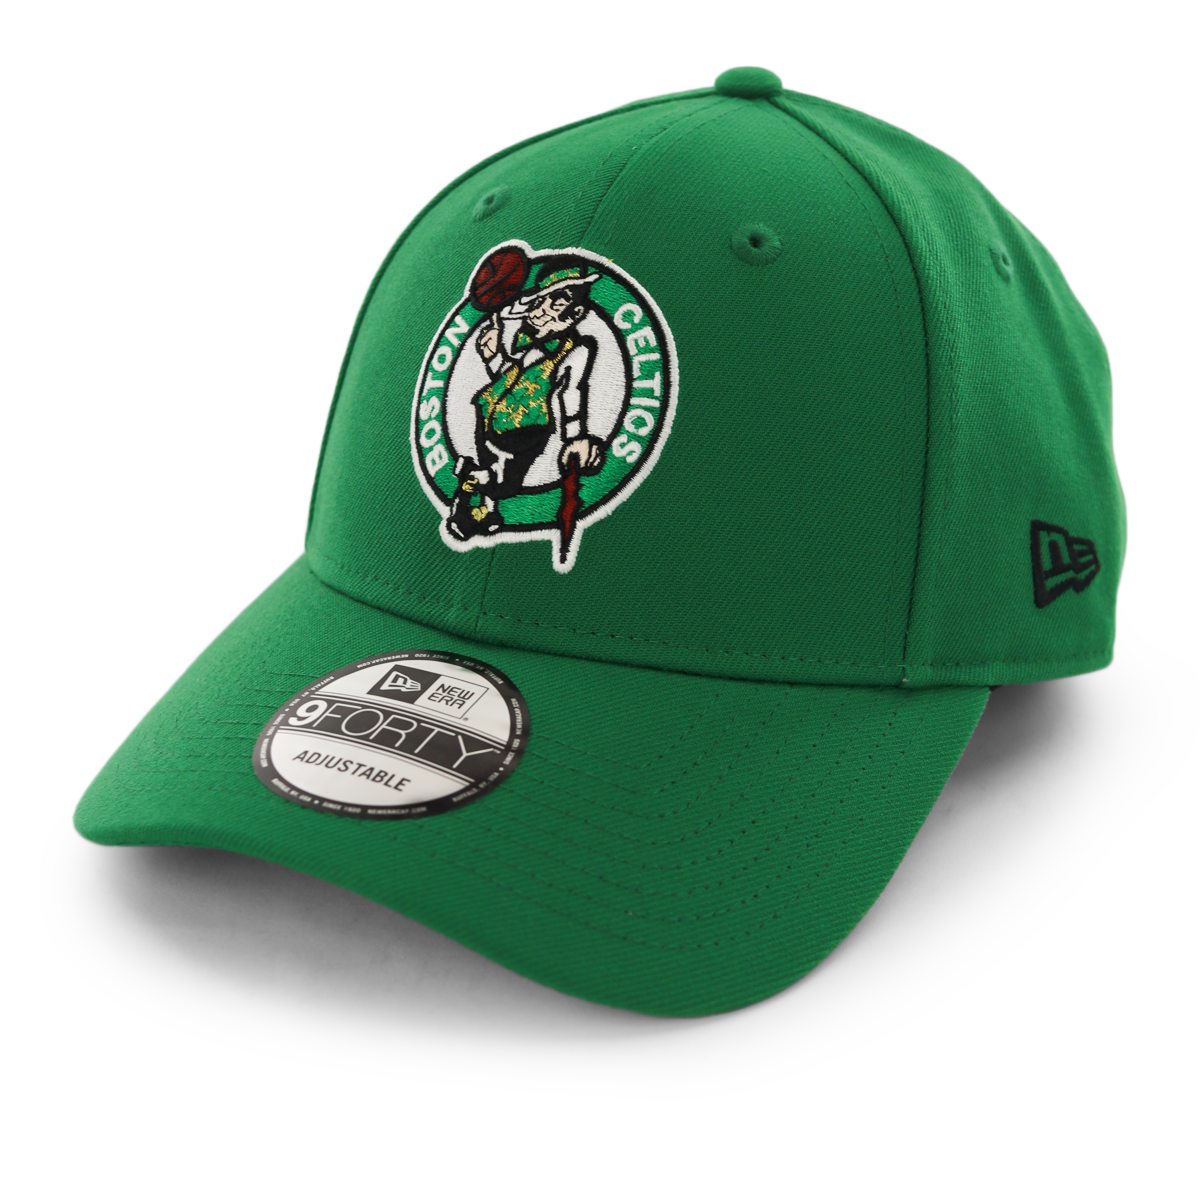  NEW ERA Men's 11405617 NBA Boston Celtics Hat The